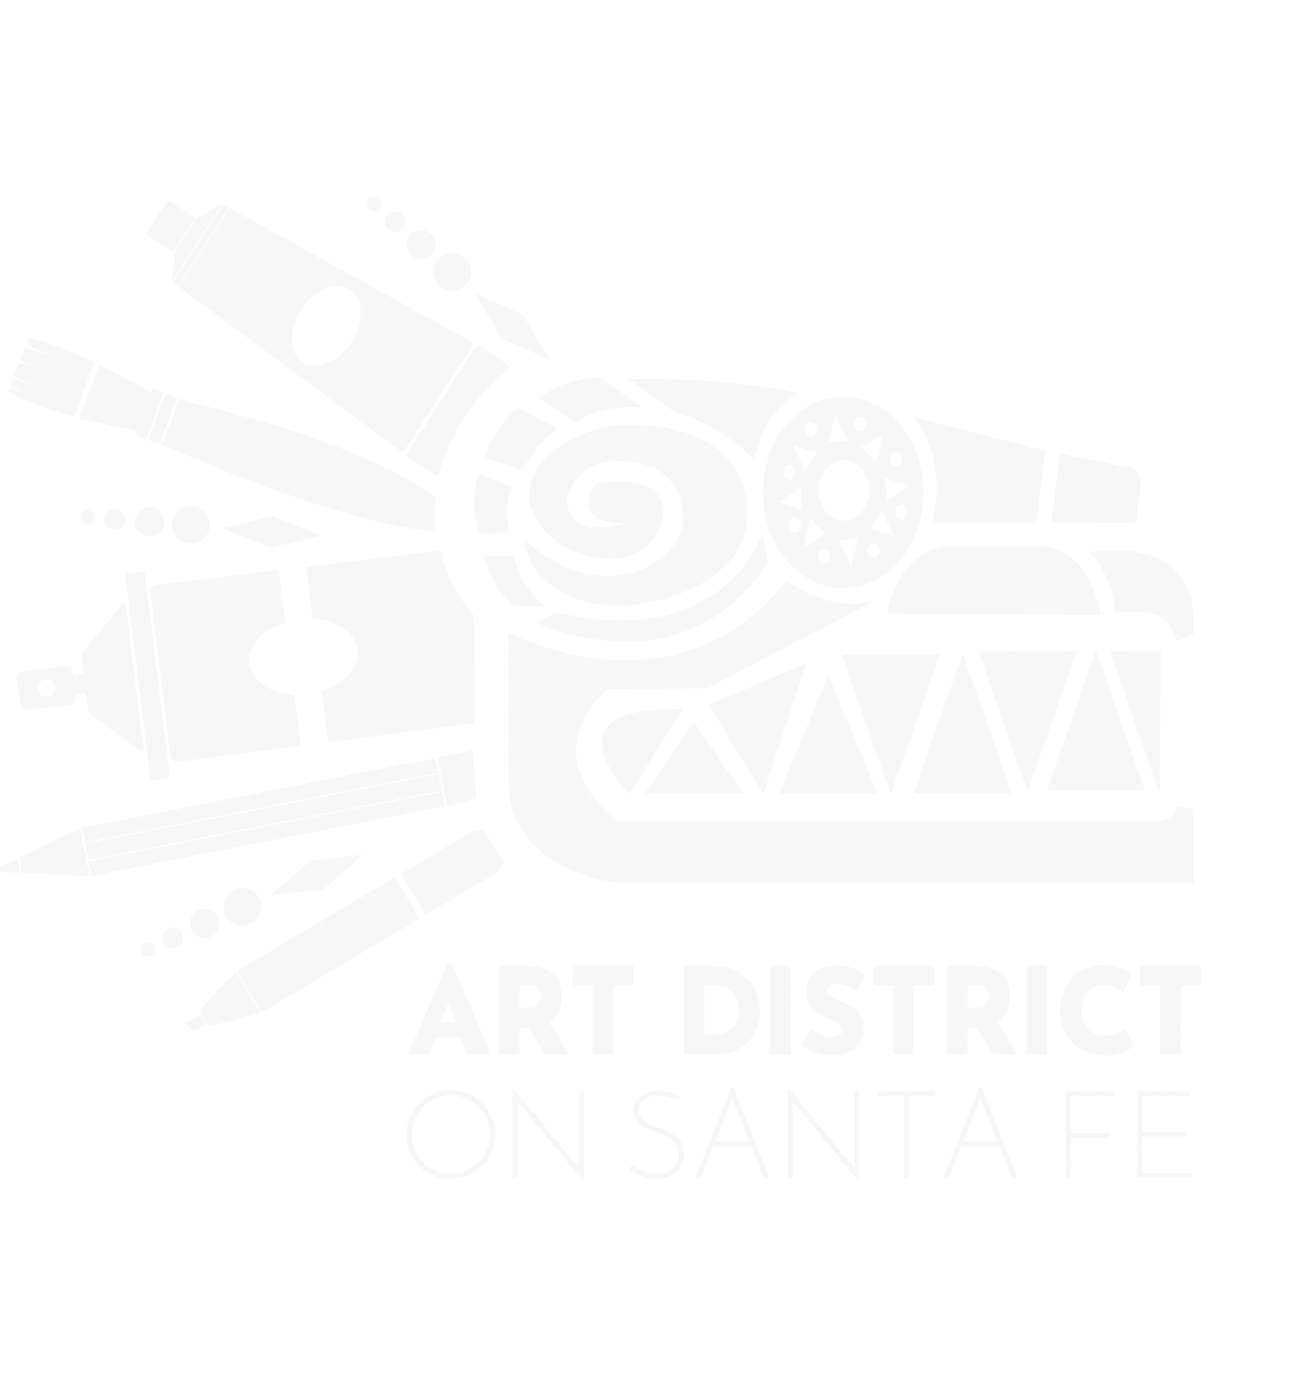 Denver's Art District on Santa Fe